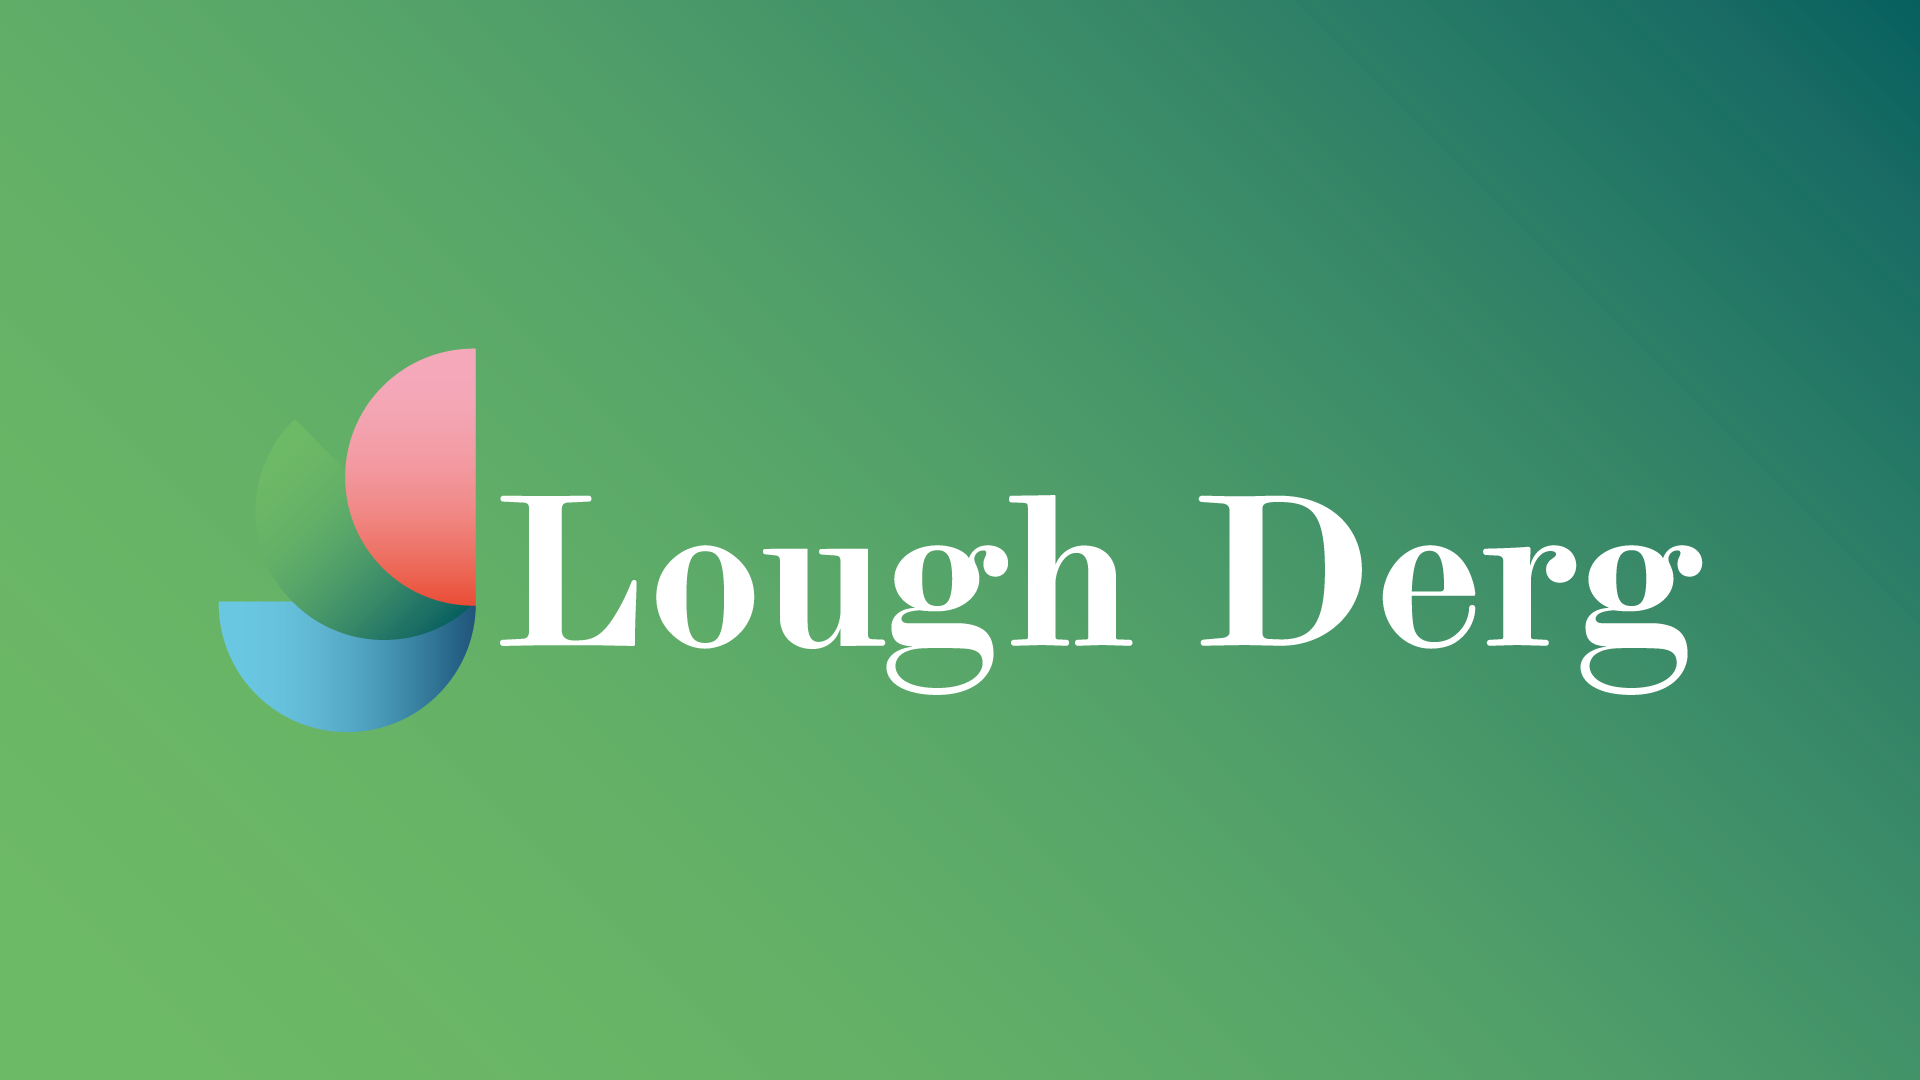 Lough Derg - One Little Studio - Branding